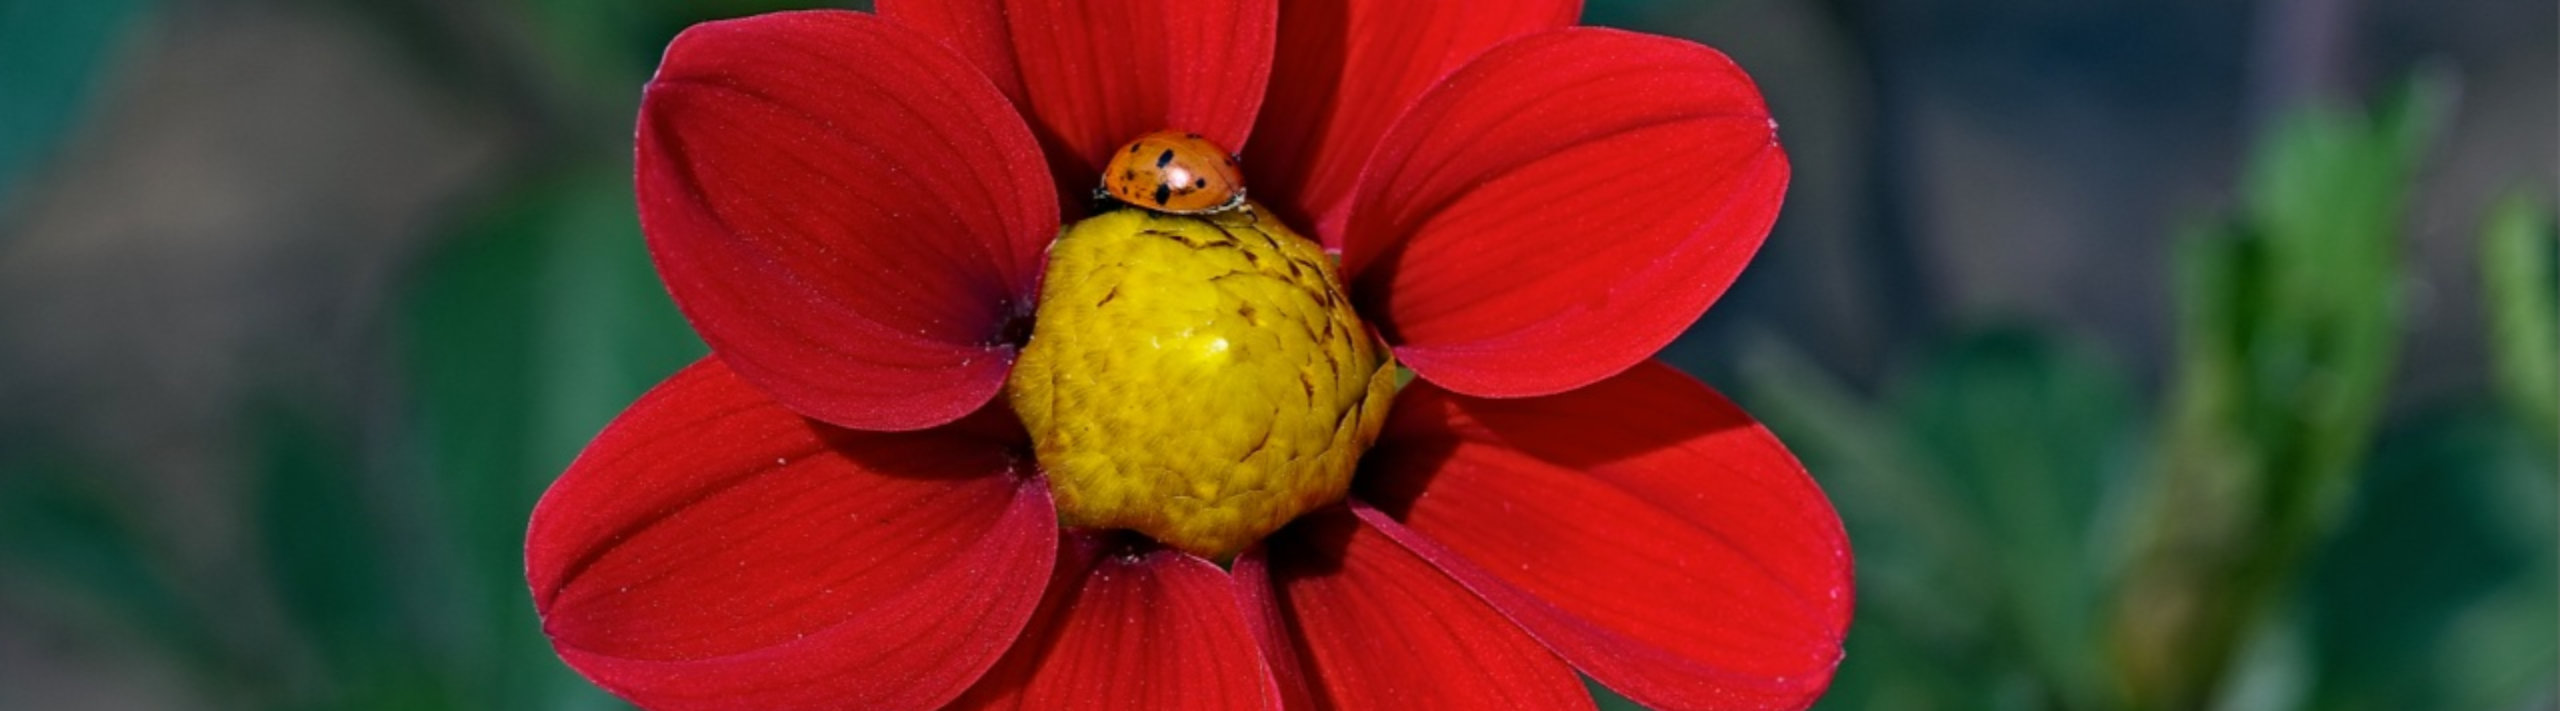 A ladybug crawling on a red flower.